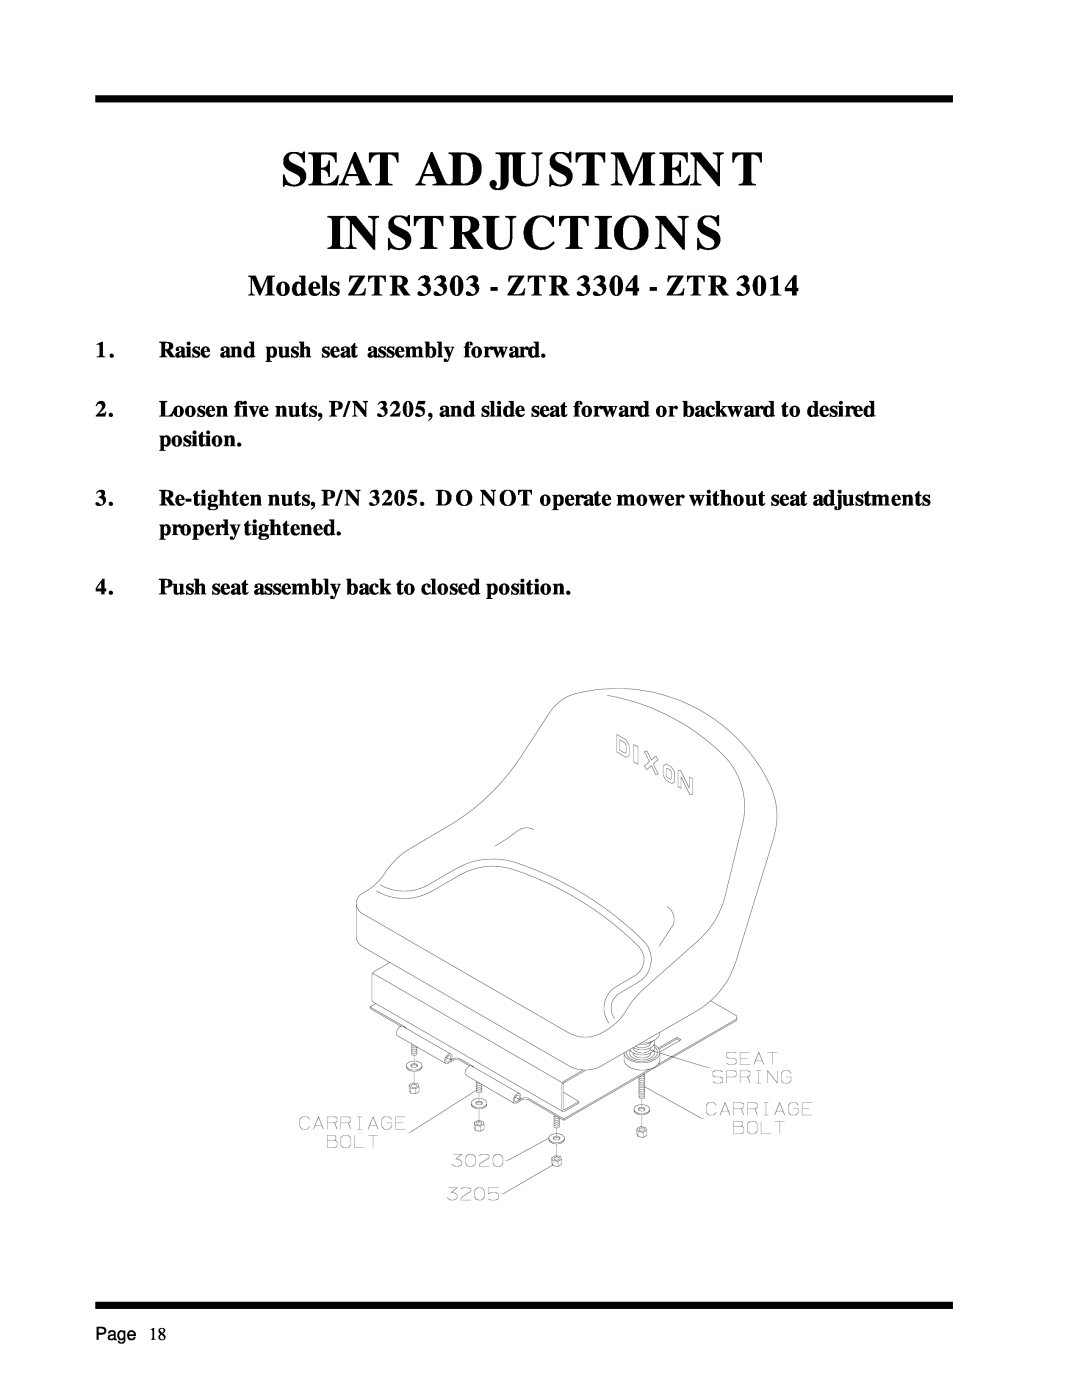 Dixon ZTR 2301 manual Seat Adjustment Instructions, Models ZTR 3303 - ZTR 3304 - ZTR, Page 